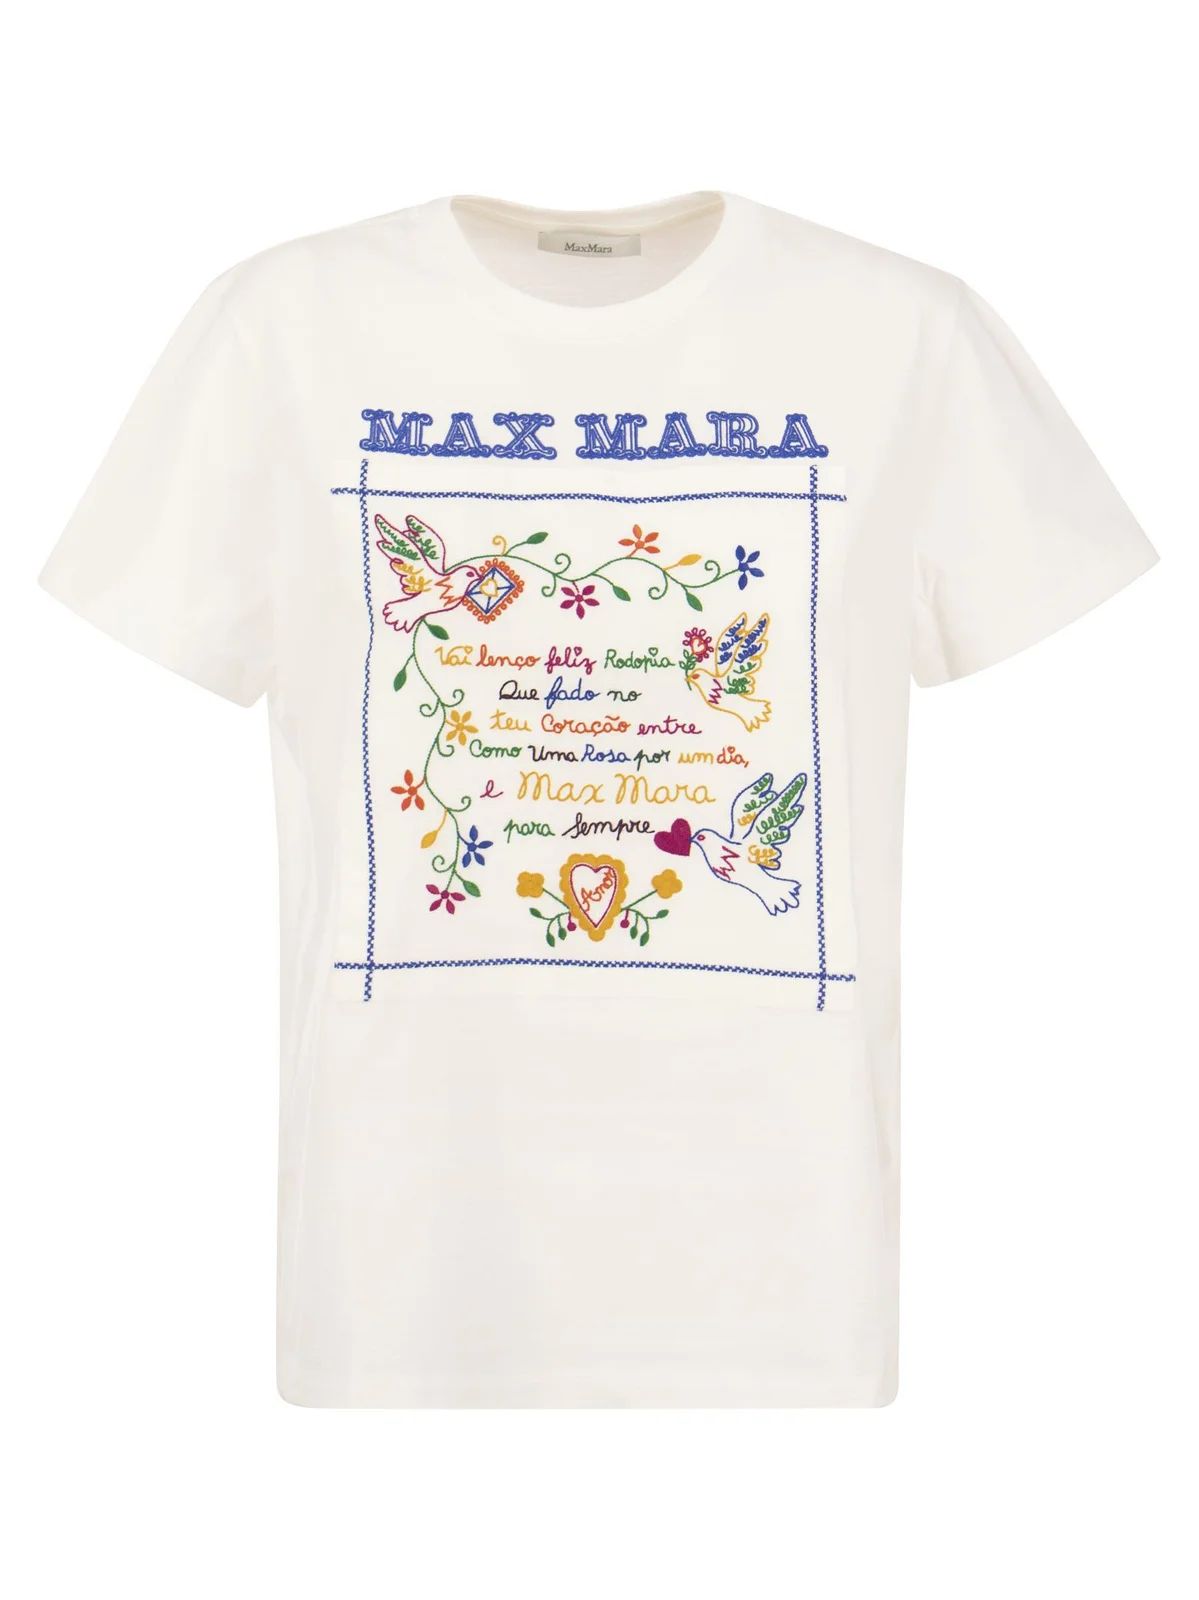 Max Mara Graphic Patterned Crewneck T-Shirt | Cettire Global